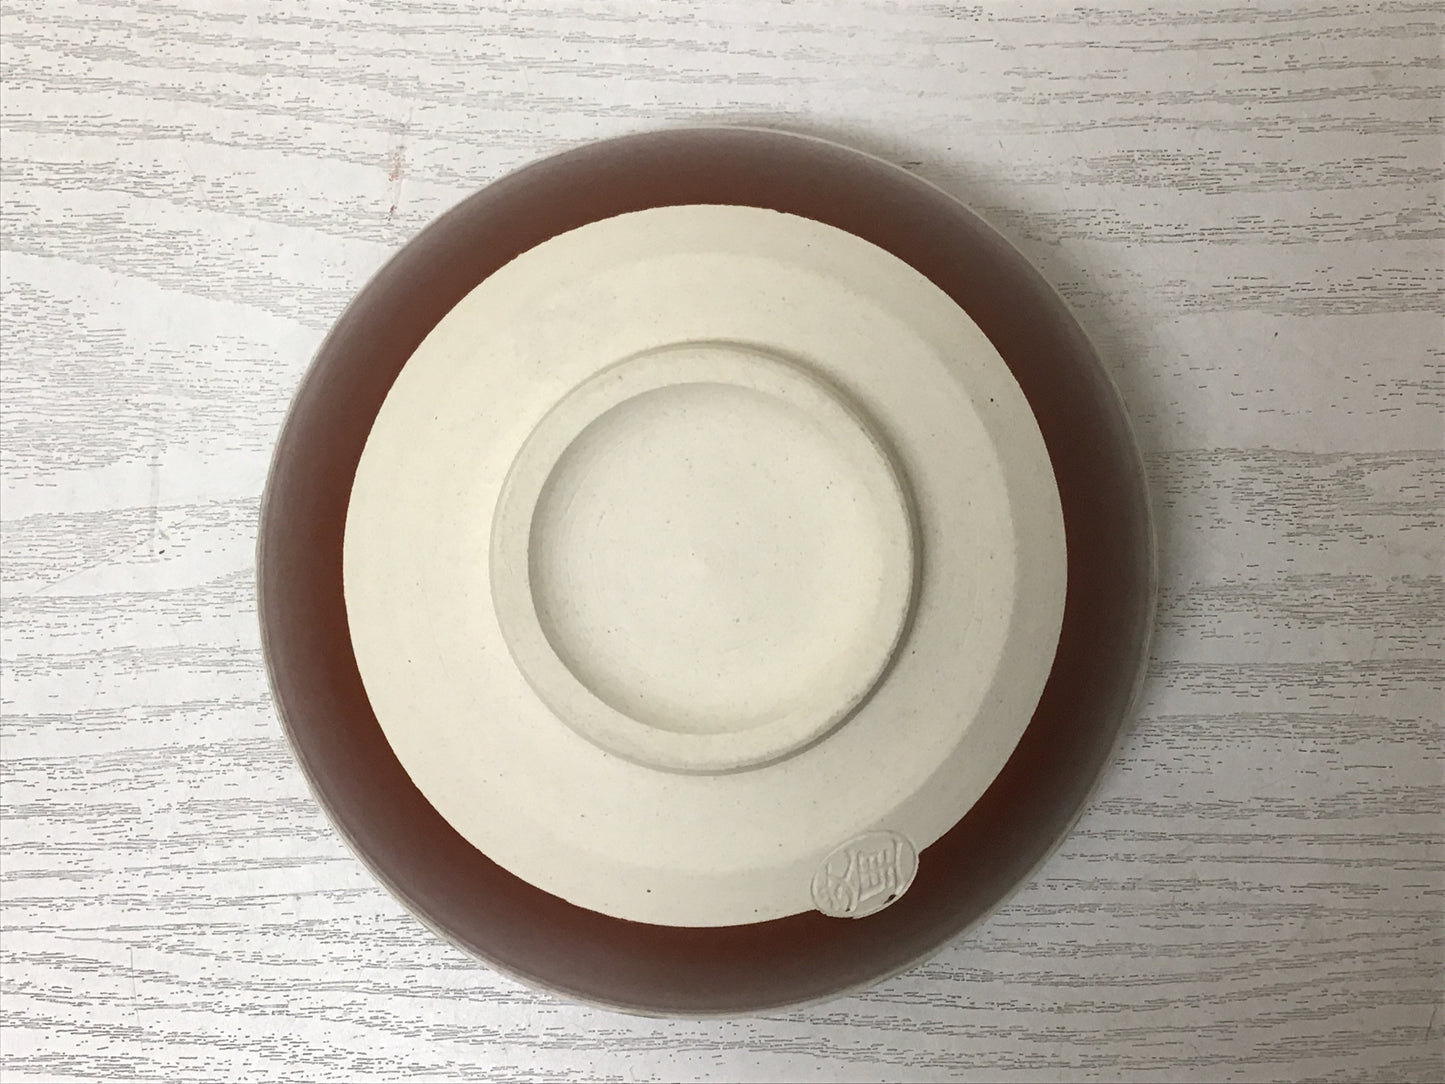 Y1987 CHAWAN Kyo-ware signed box Japanese bowl pottery Japan tea ceremony